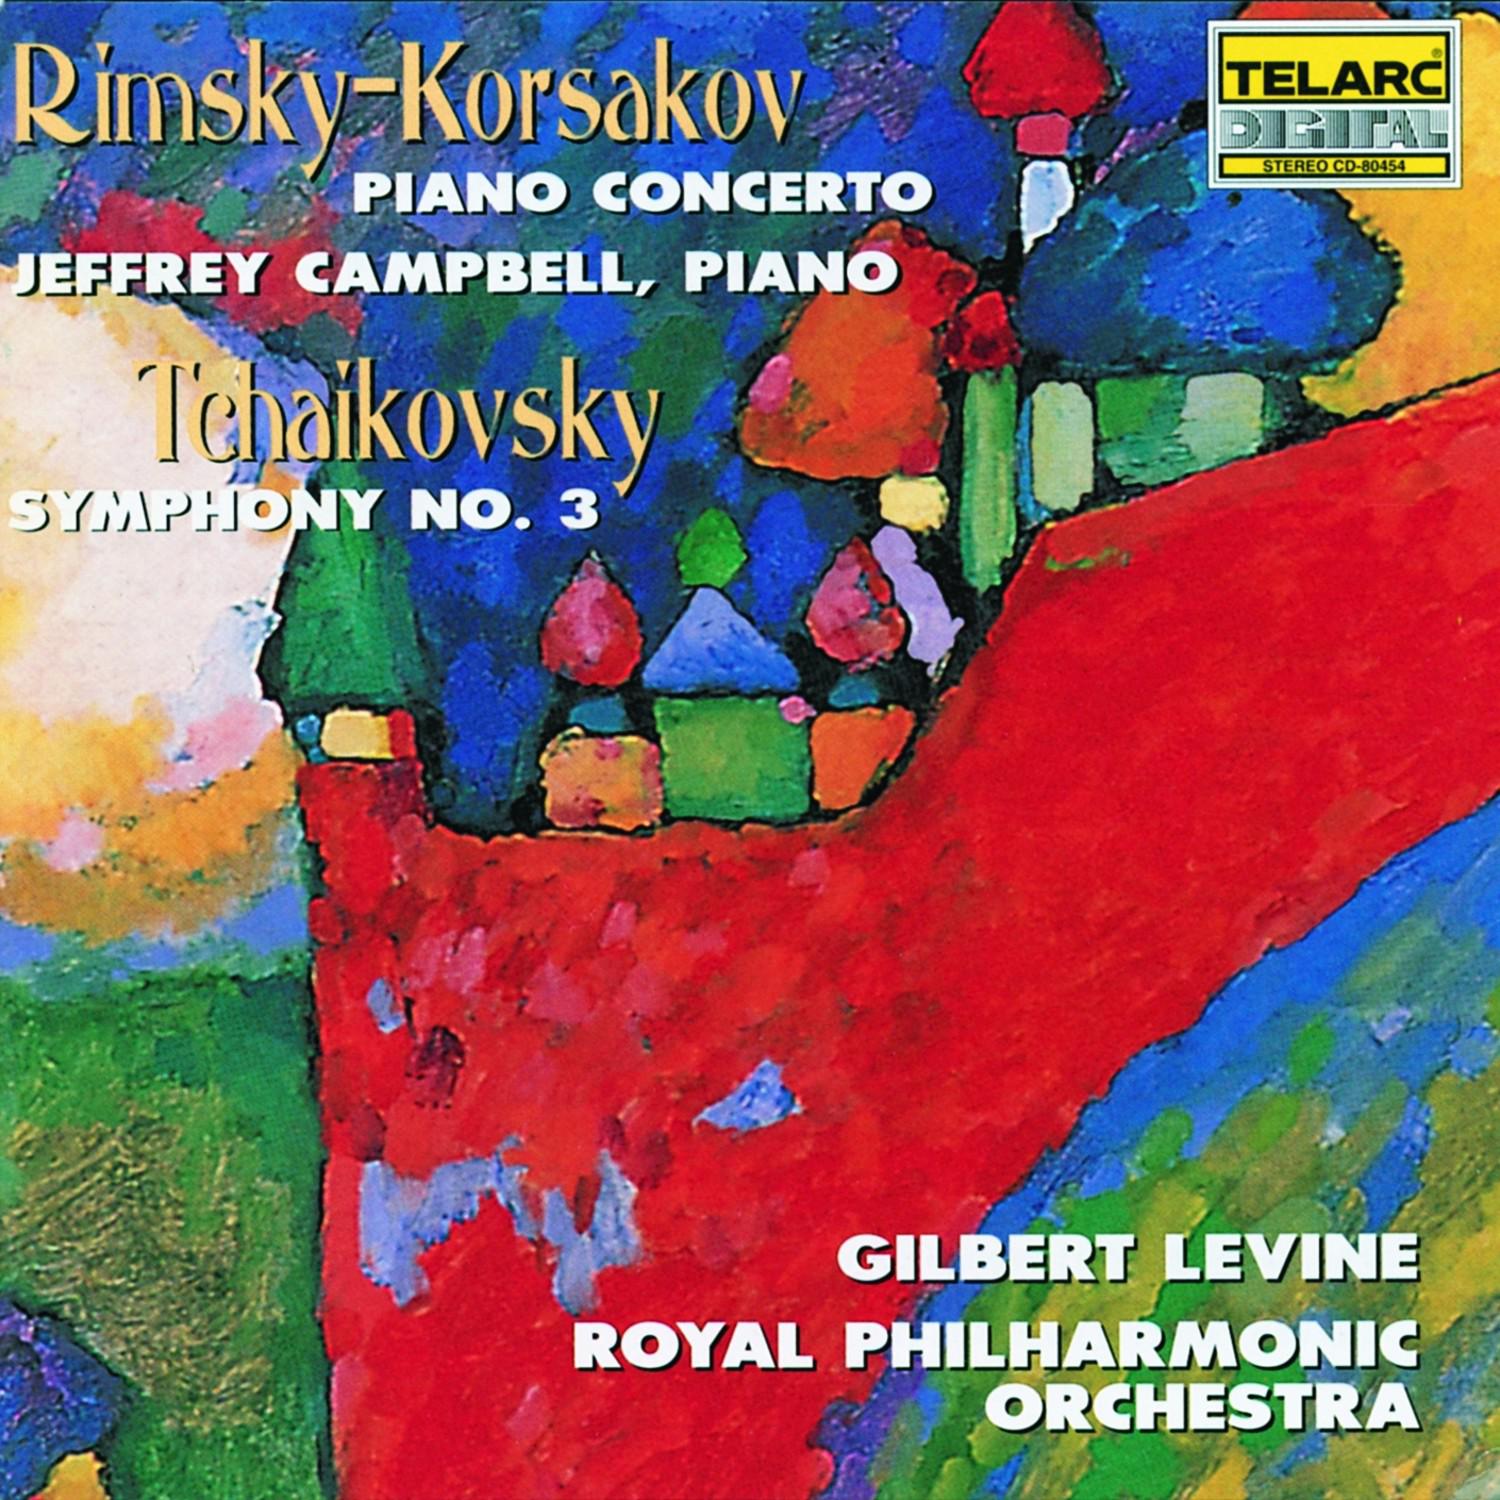 Rimsky-Korsakov Piano Concerto & Tchaikovsky Symphony No. 3